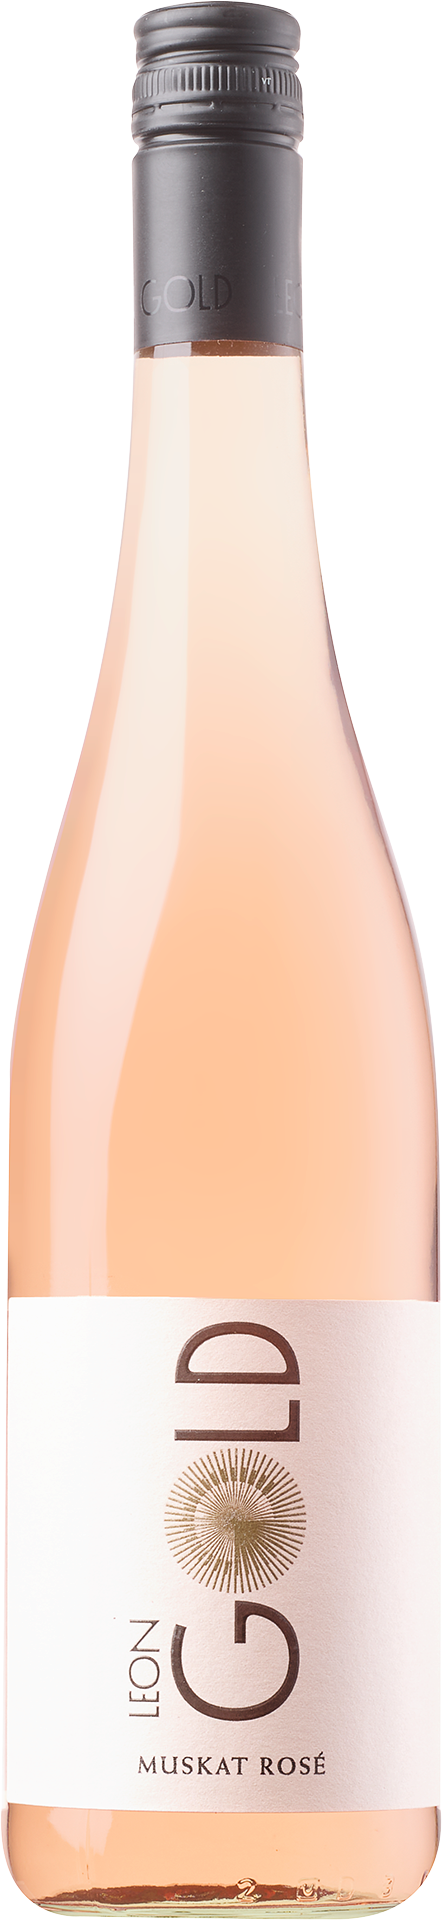 Muskat-Trollinger Rosé 